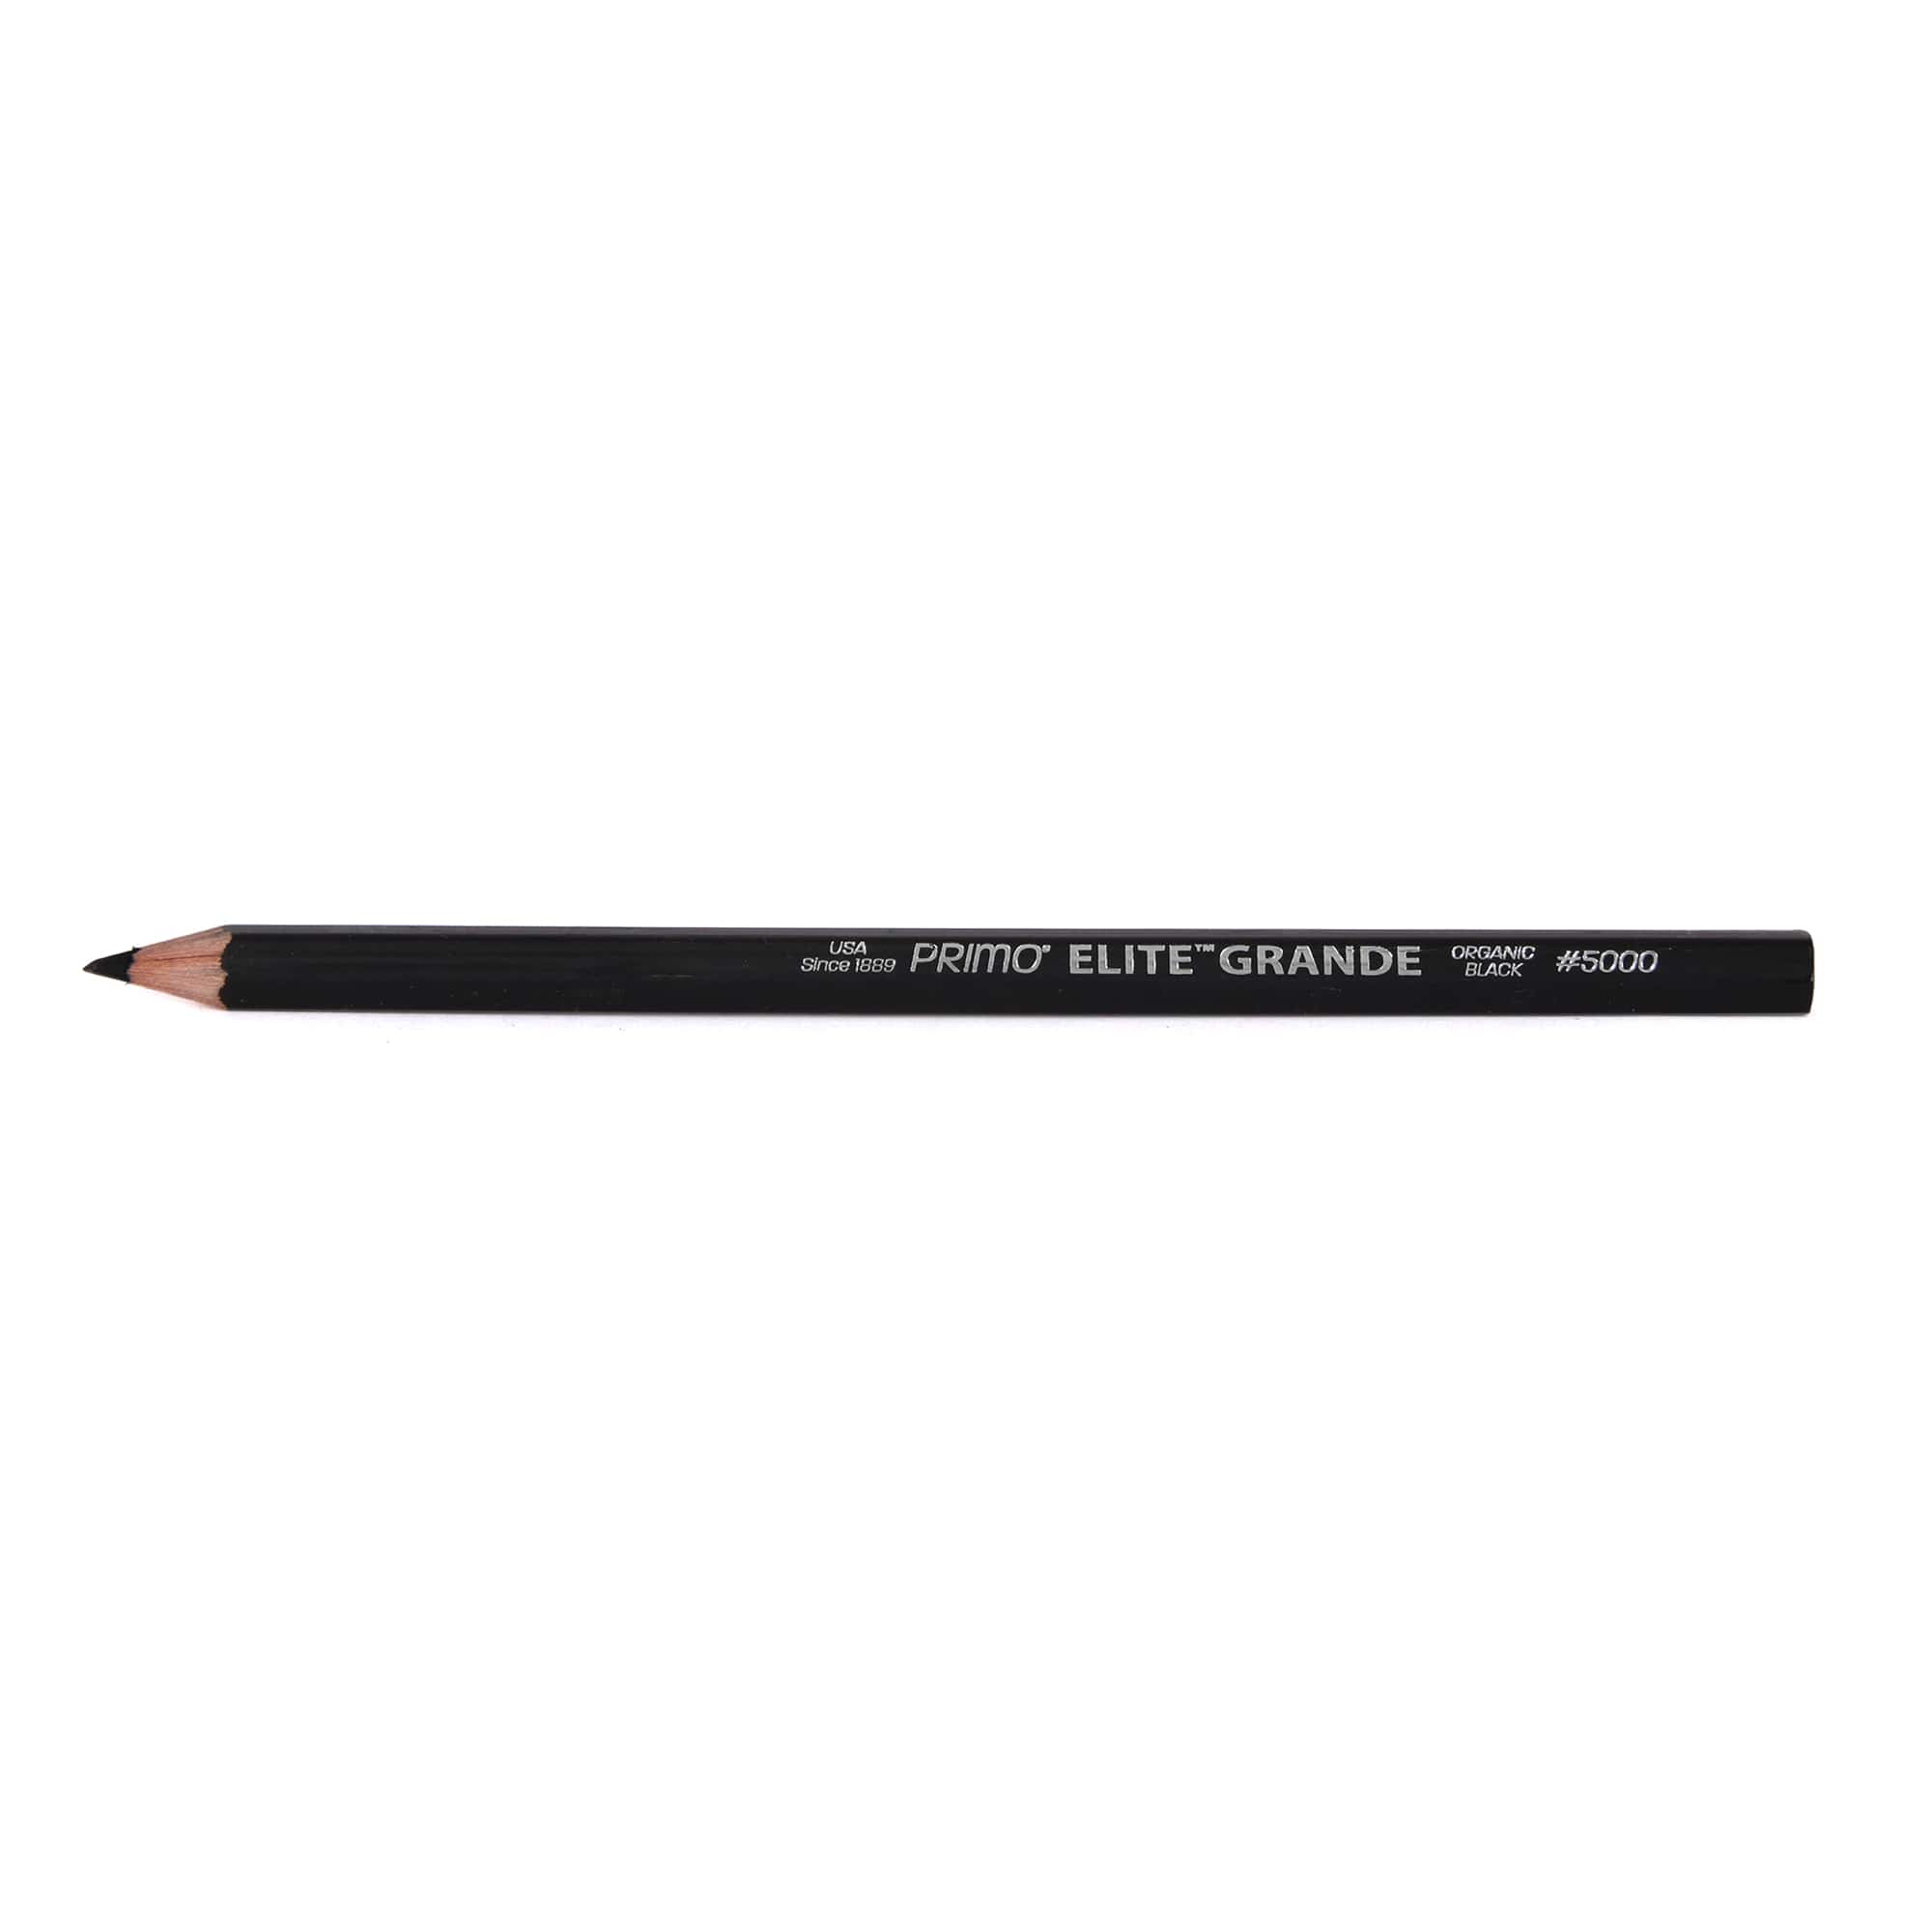 Primo Euro Blend Charcoal Pencil – Bianco (White)